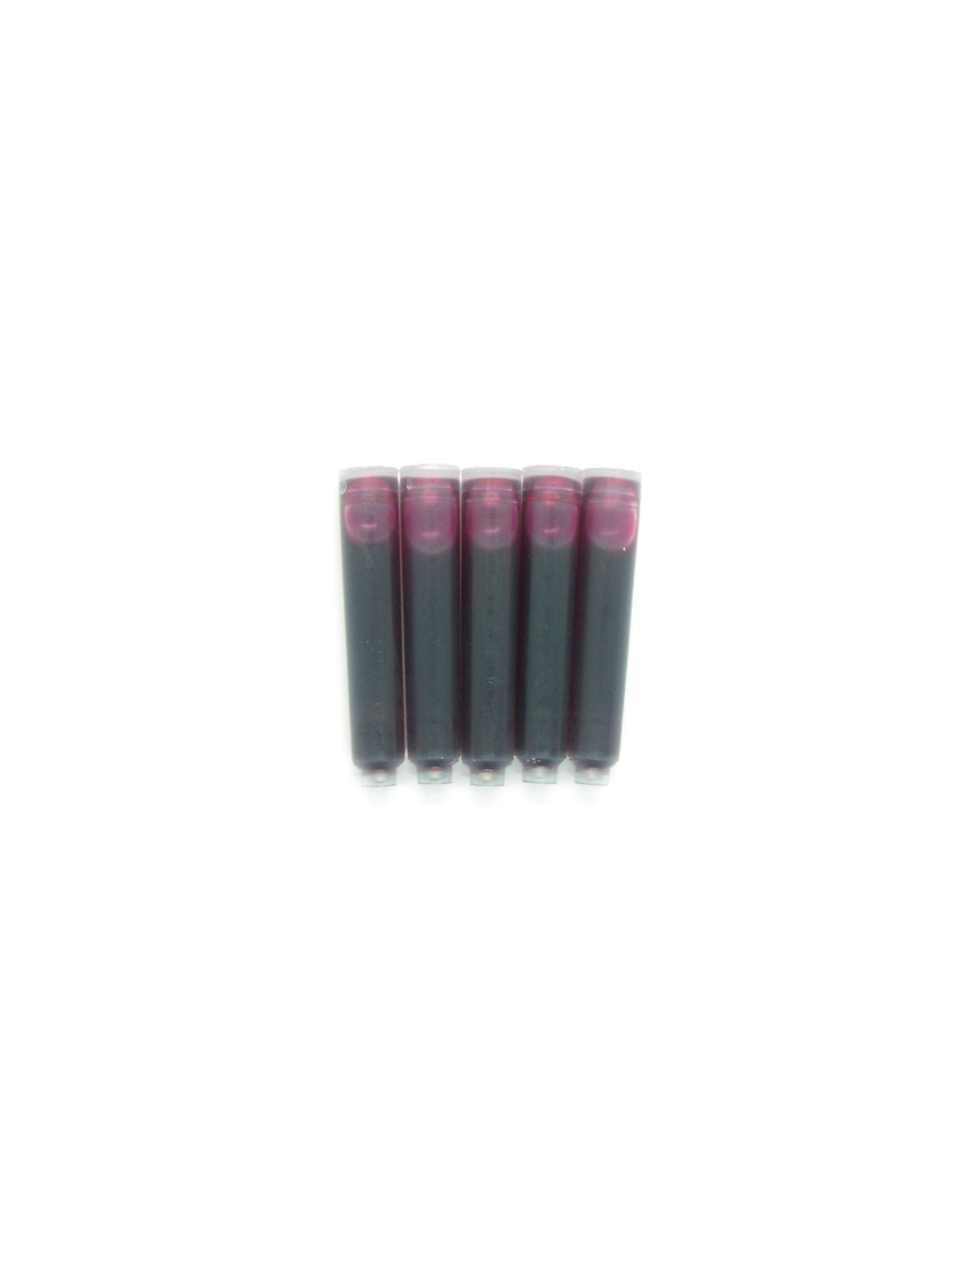 PenConverter Ink Cartridges For European Fountain Pens (Pink)